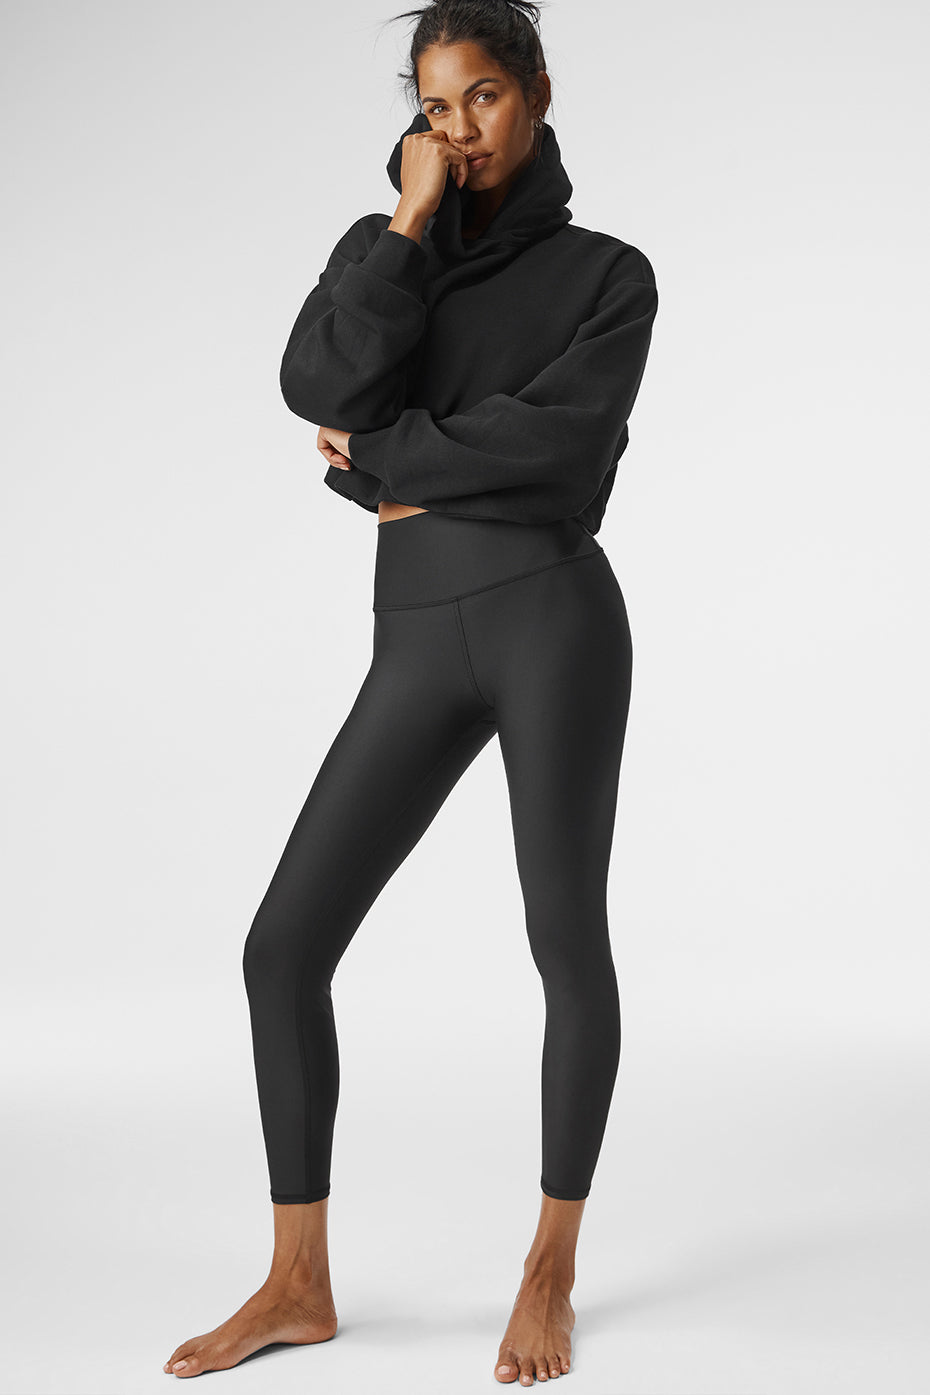 Umbra Sports Black Leggings L4241 Women Sportswear Yoga Fitness